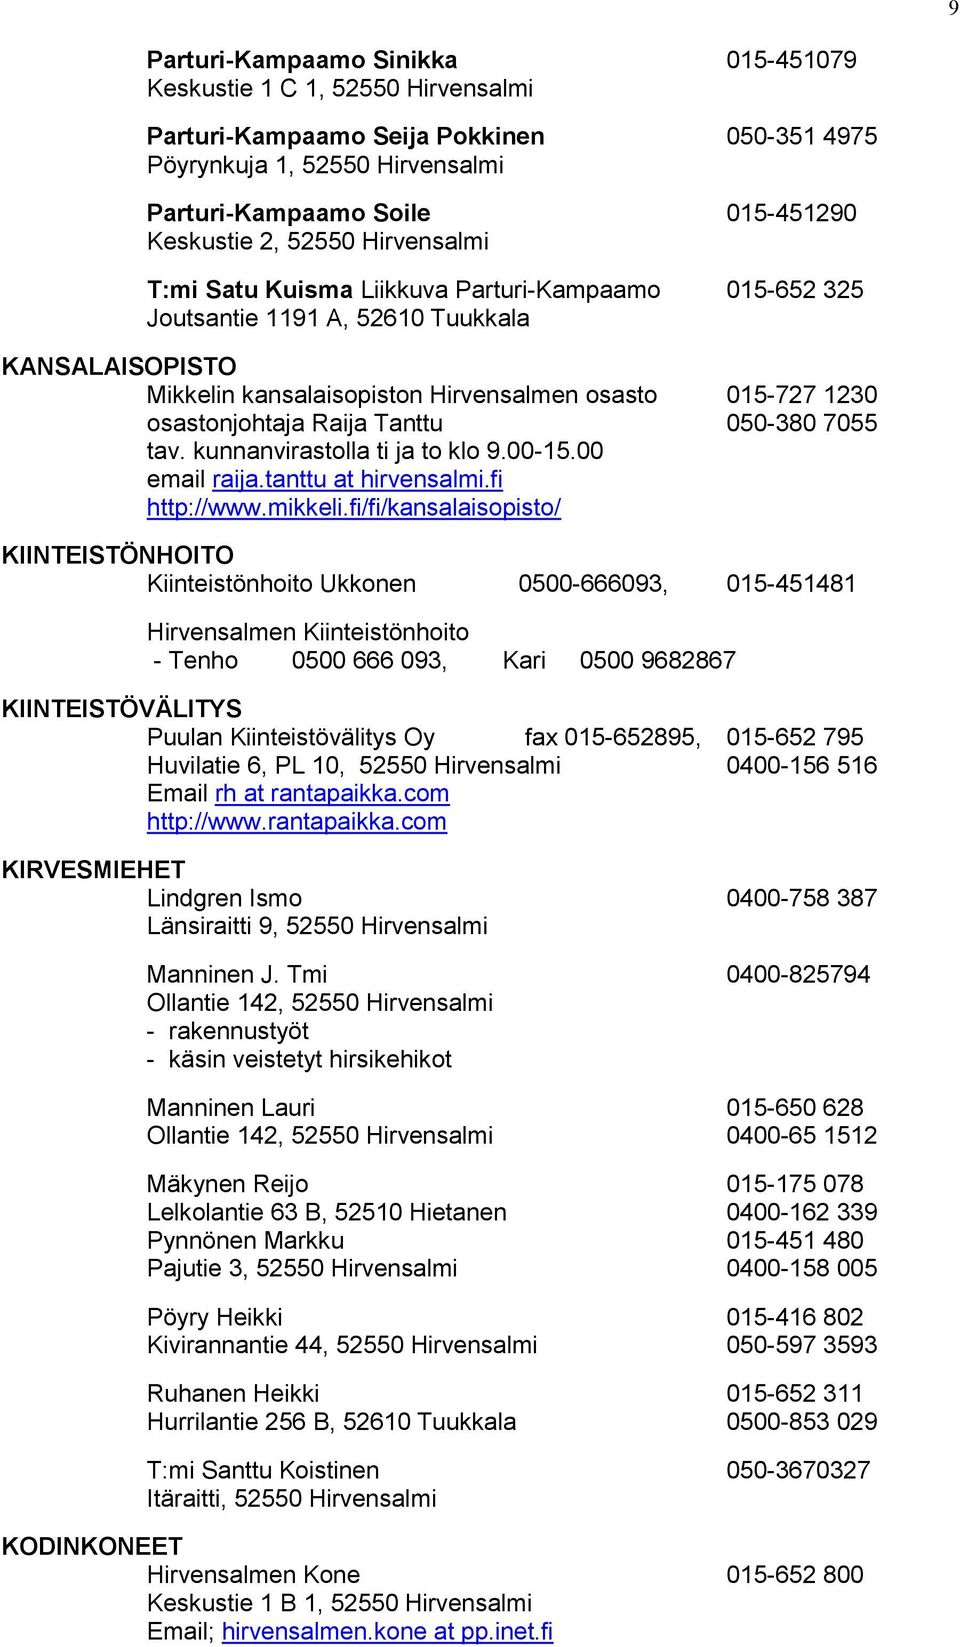 Raija Tanttu 050-380 7055 tav. kunnanvirastolla ti ja to klo 9.00-15.00 email raija.tanttu at hirvensalmi.fi http://www.mikkeli.